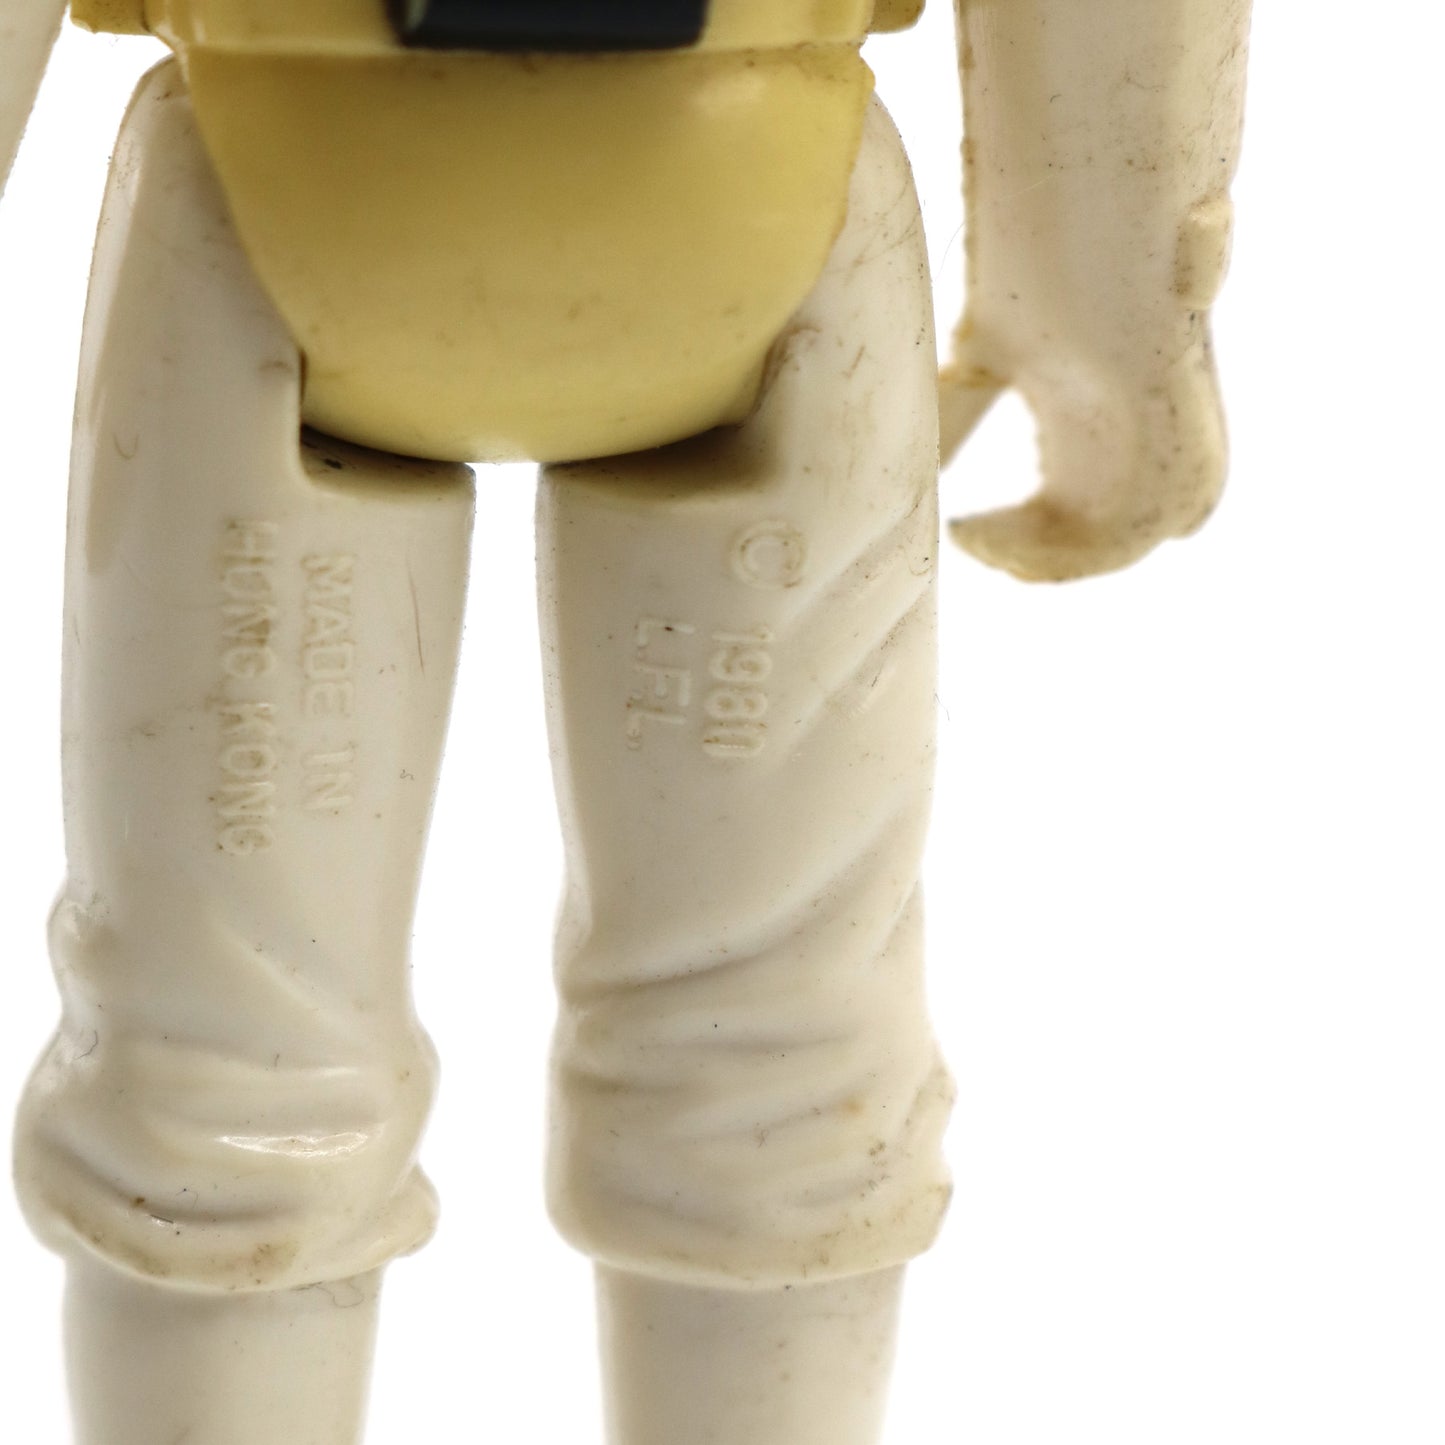 Vintage 1980 Imperial Stoormtrooper Battle of Hoth Figurine